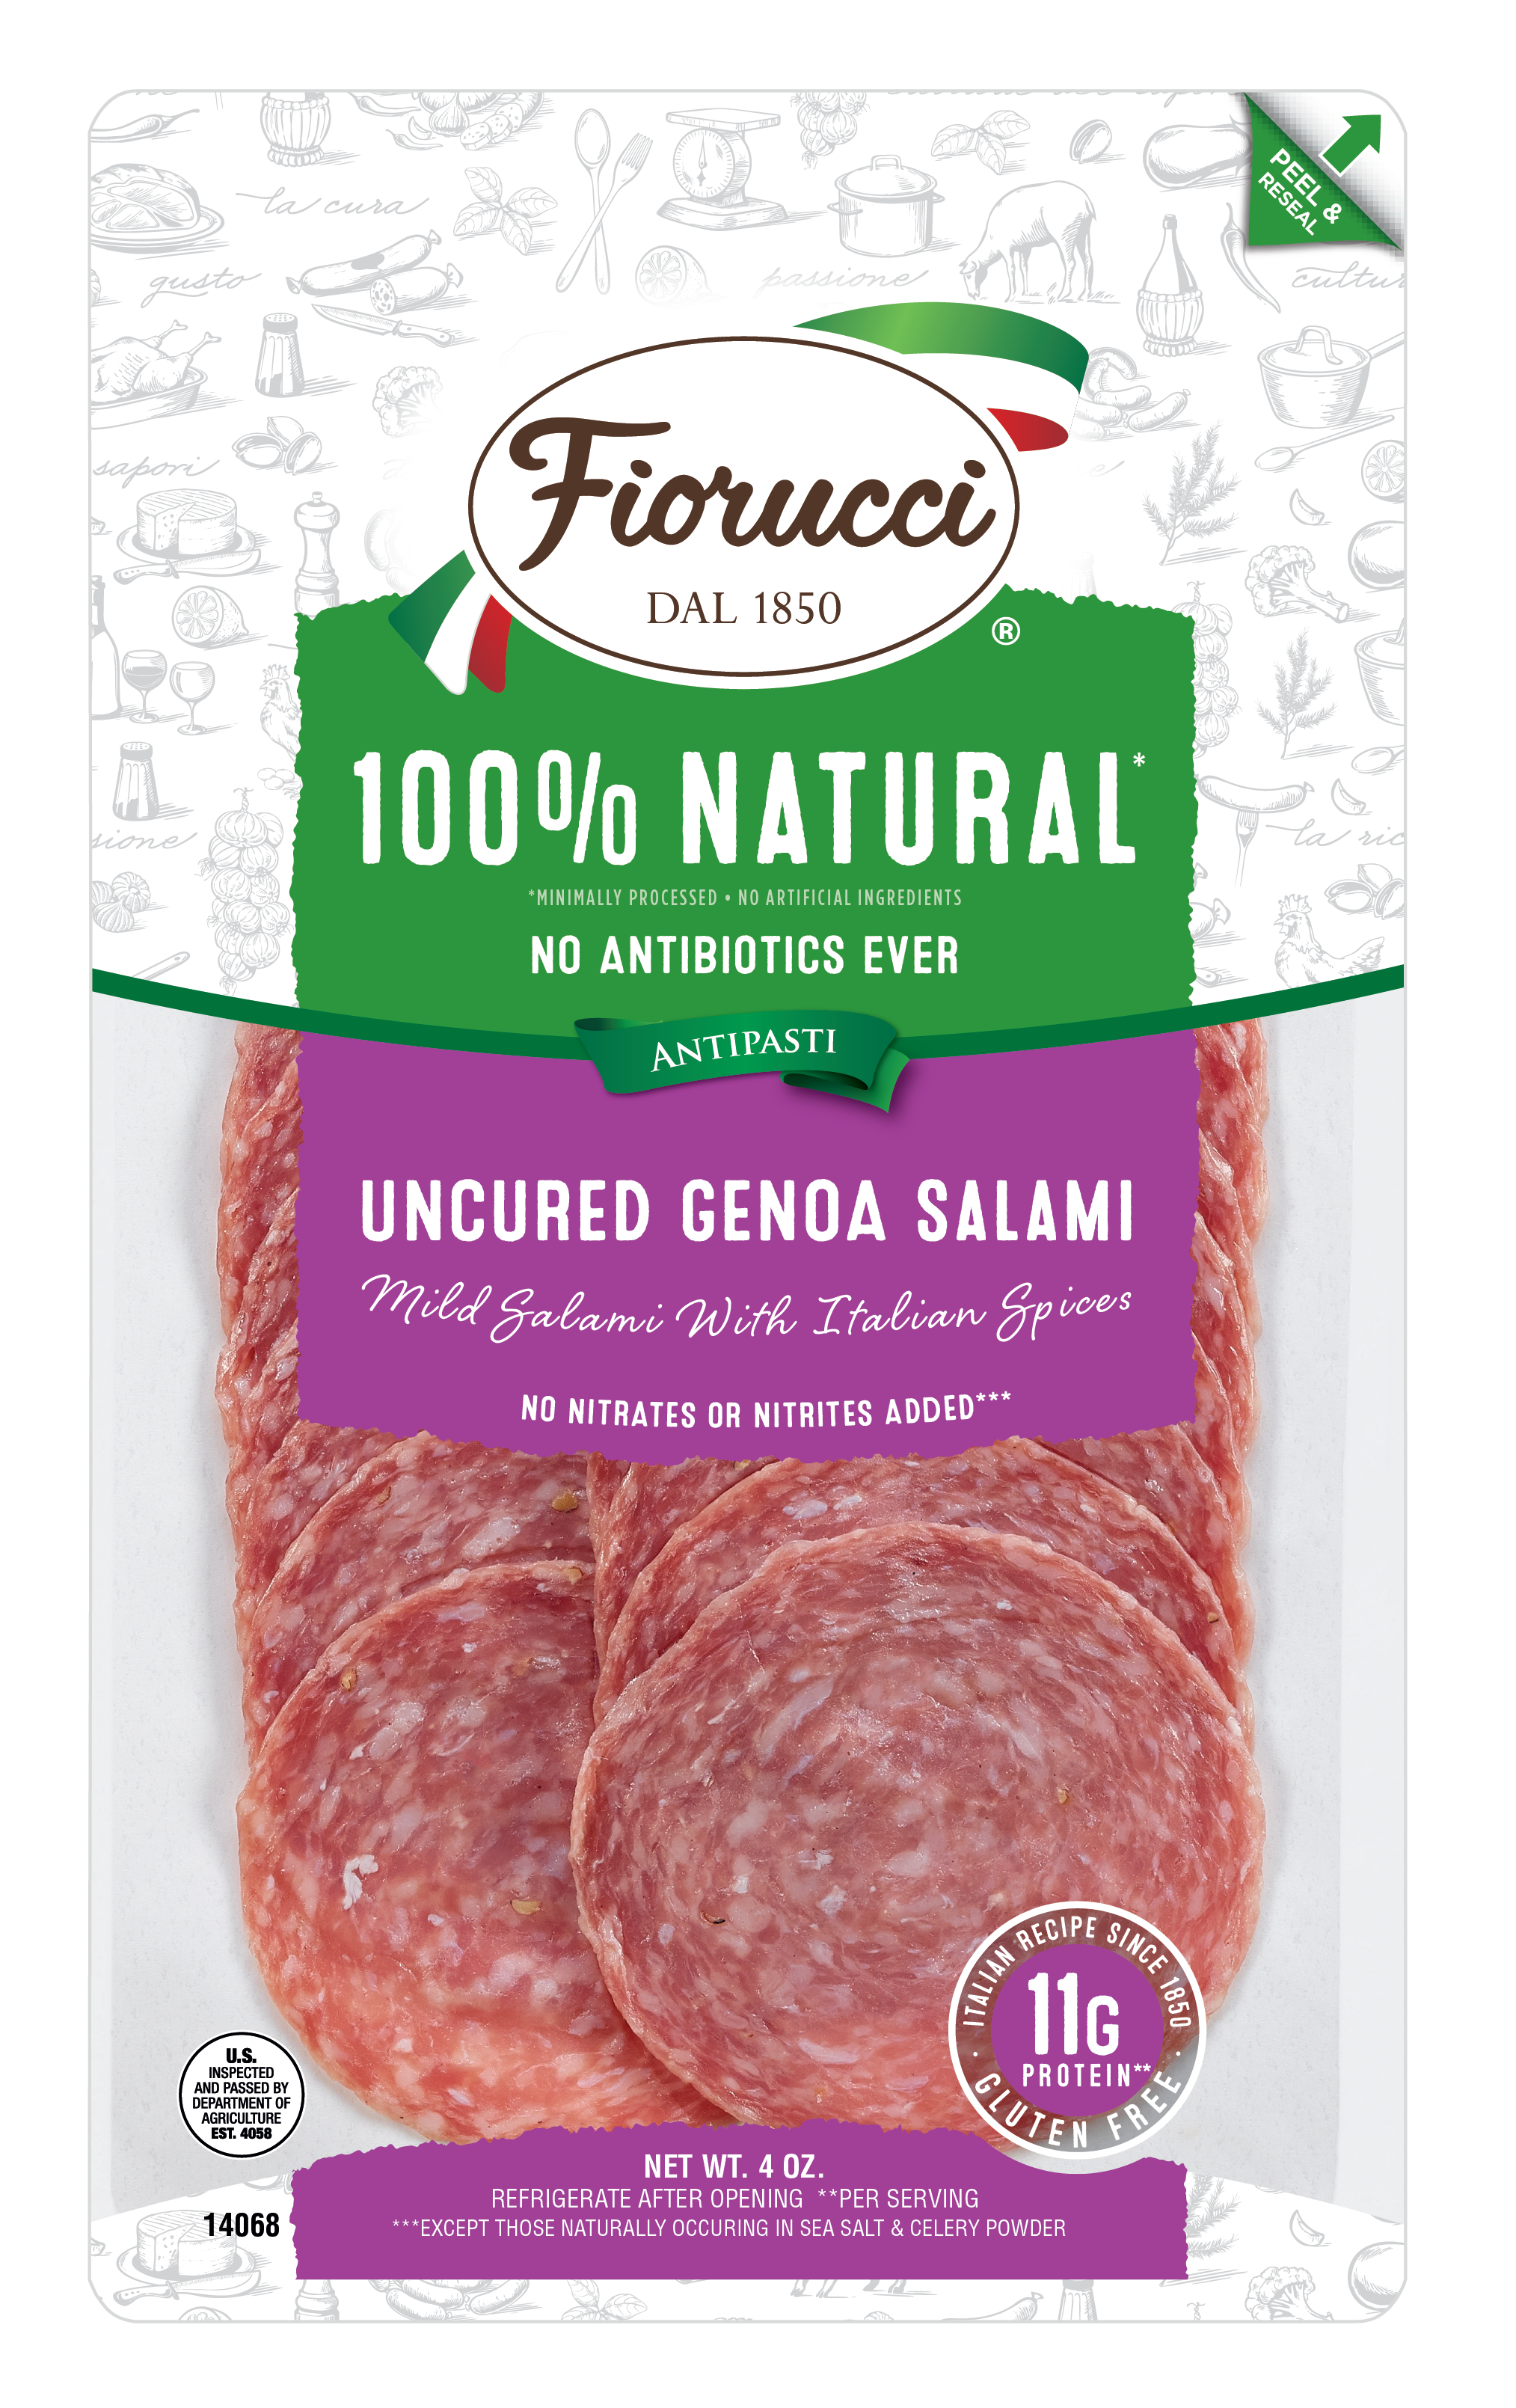 Uncured Genoa Salami